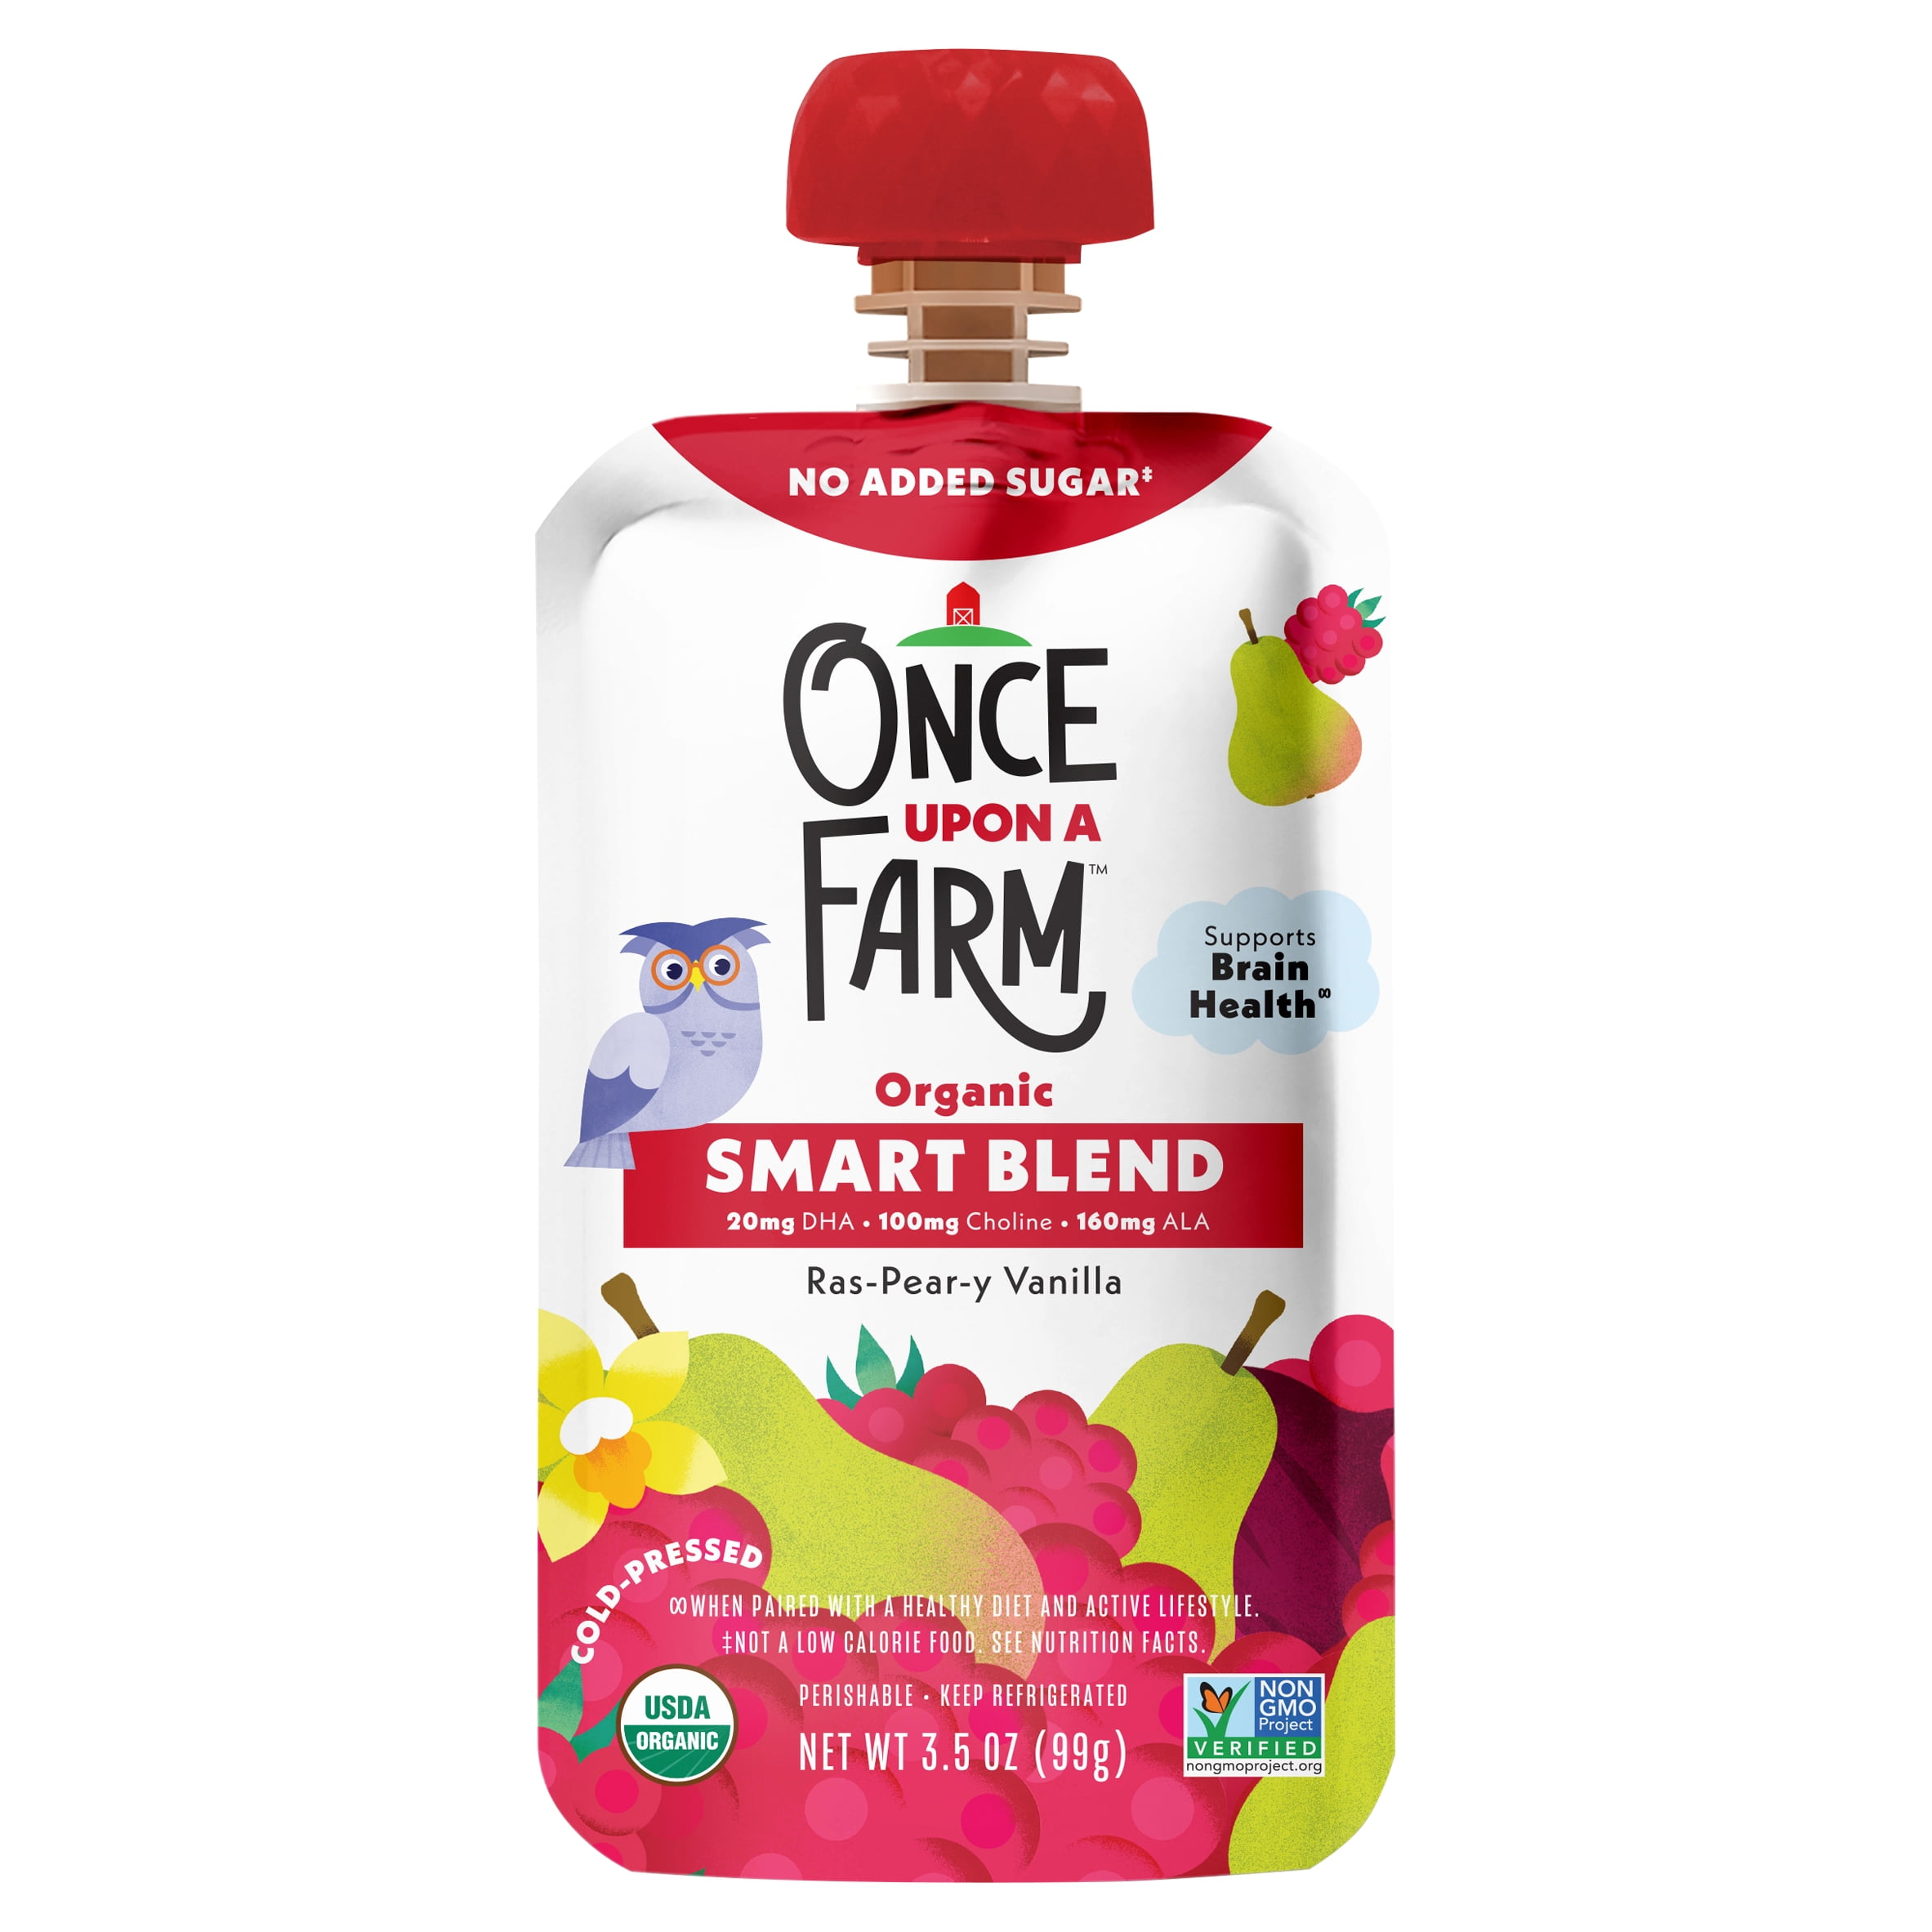 Once Upon a Farm Organic Rasp-pear-y Vanilla Smart Blend, 3.5 oz Pouch ...